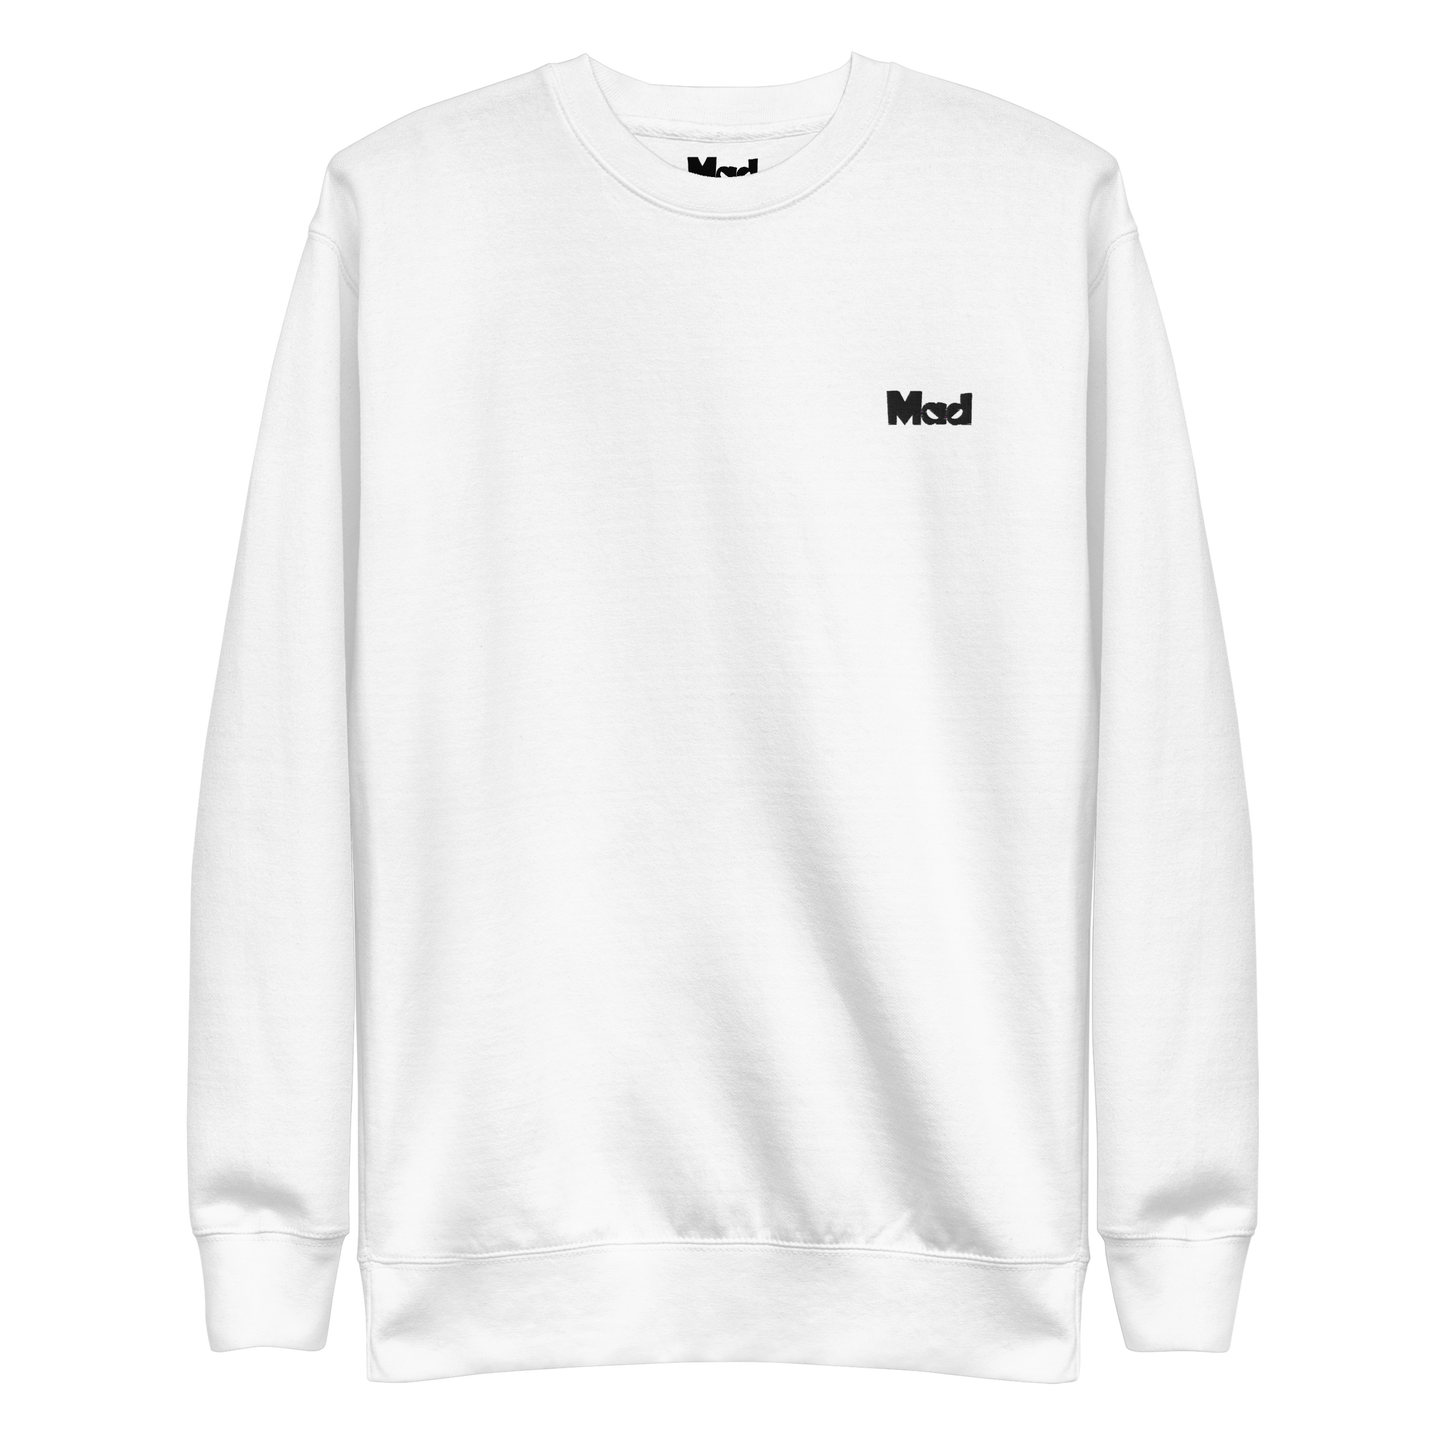 Mad Embroidered Sweatshirt